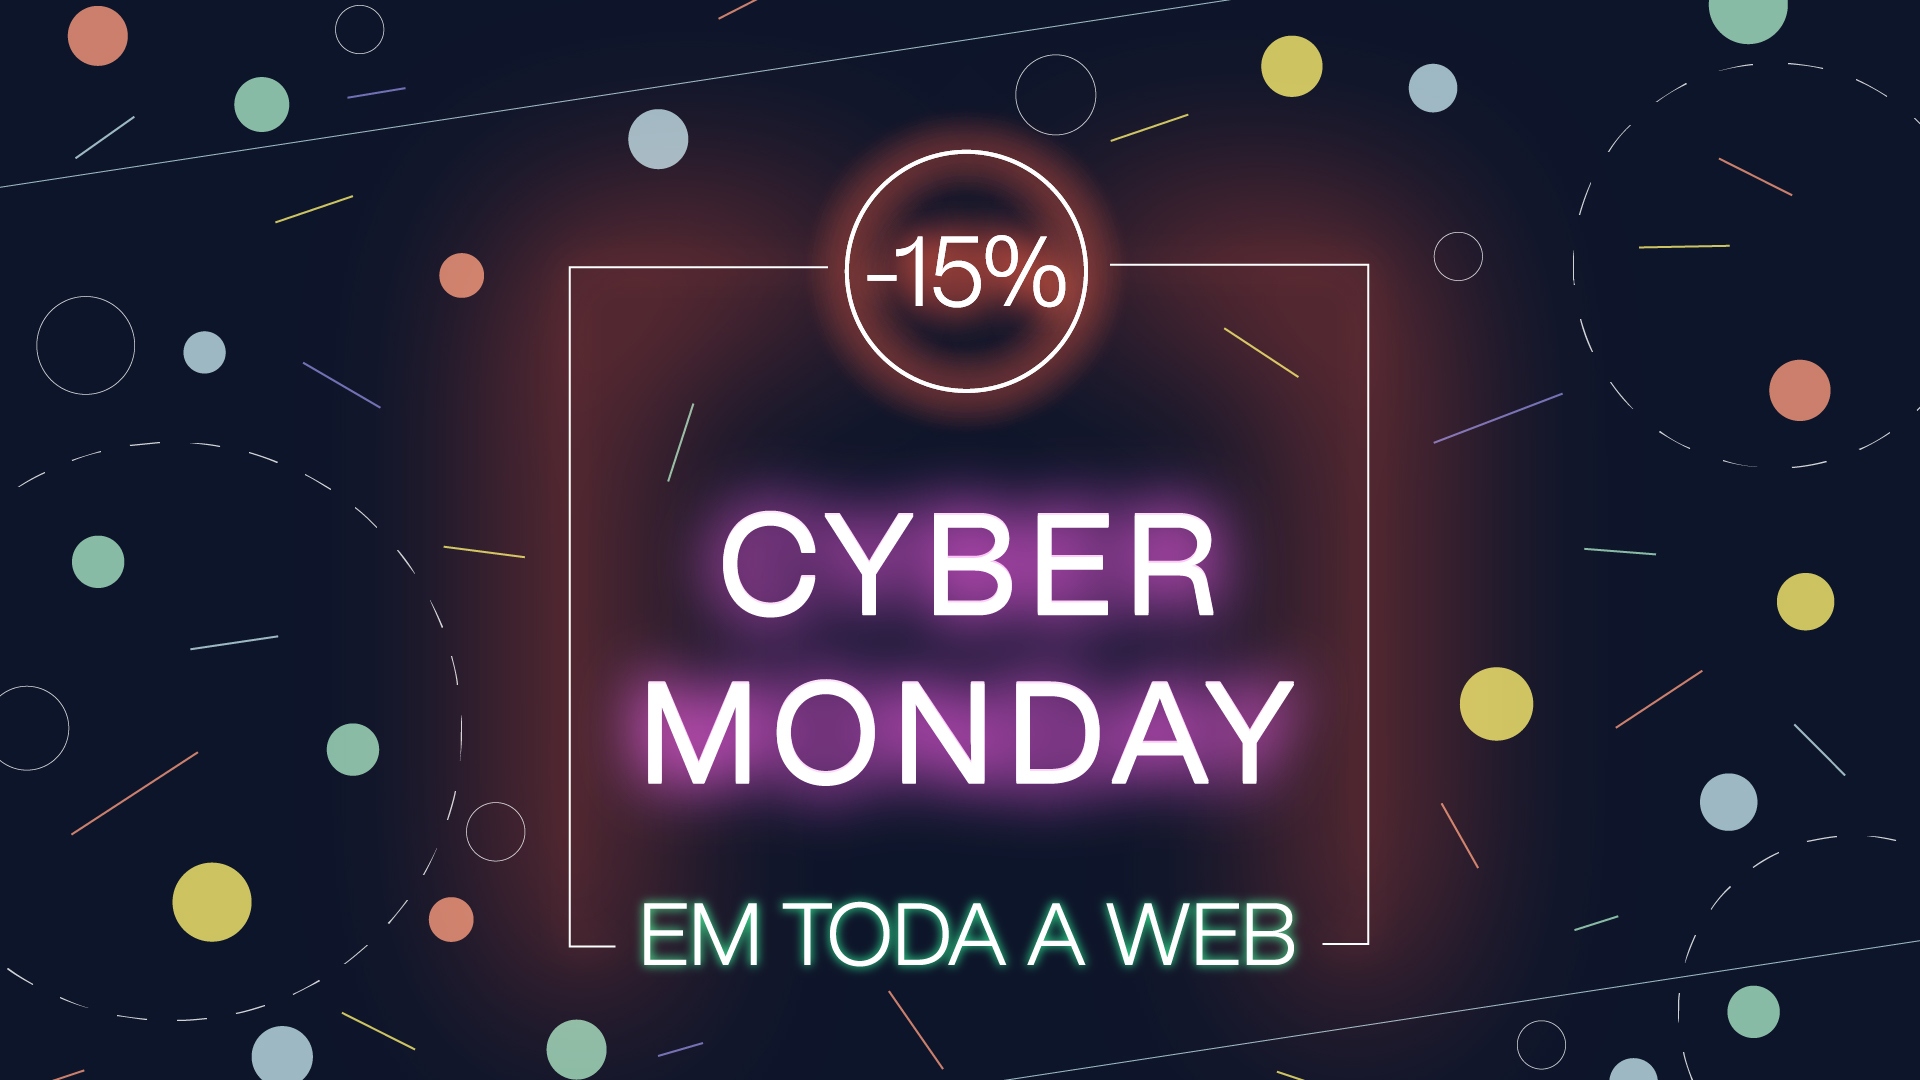 Cyber Monday : -15% em toda a web